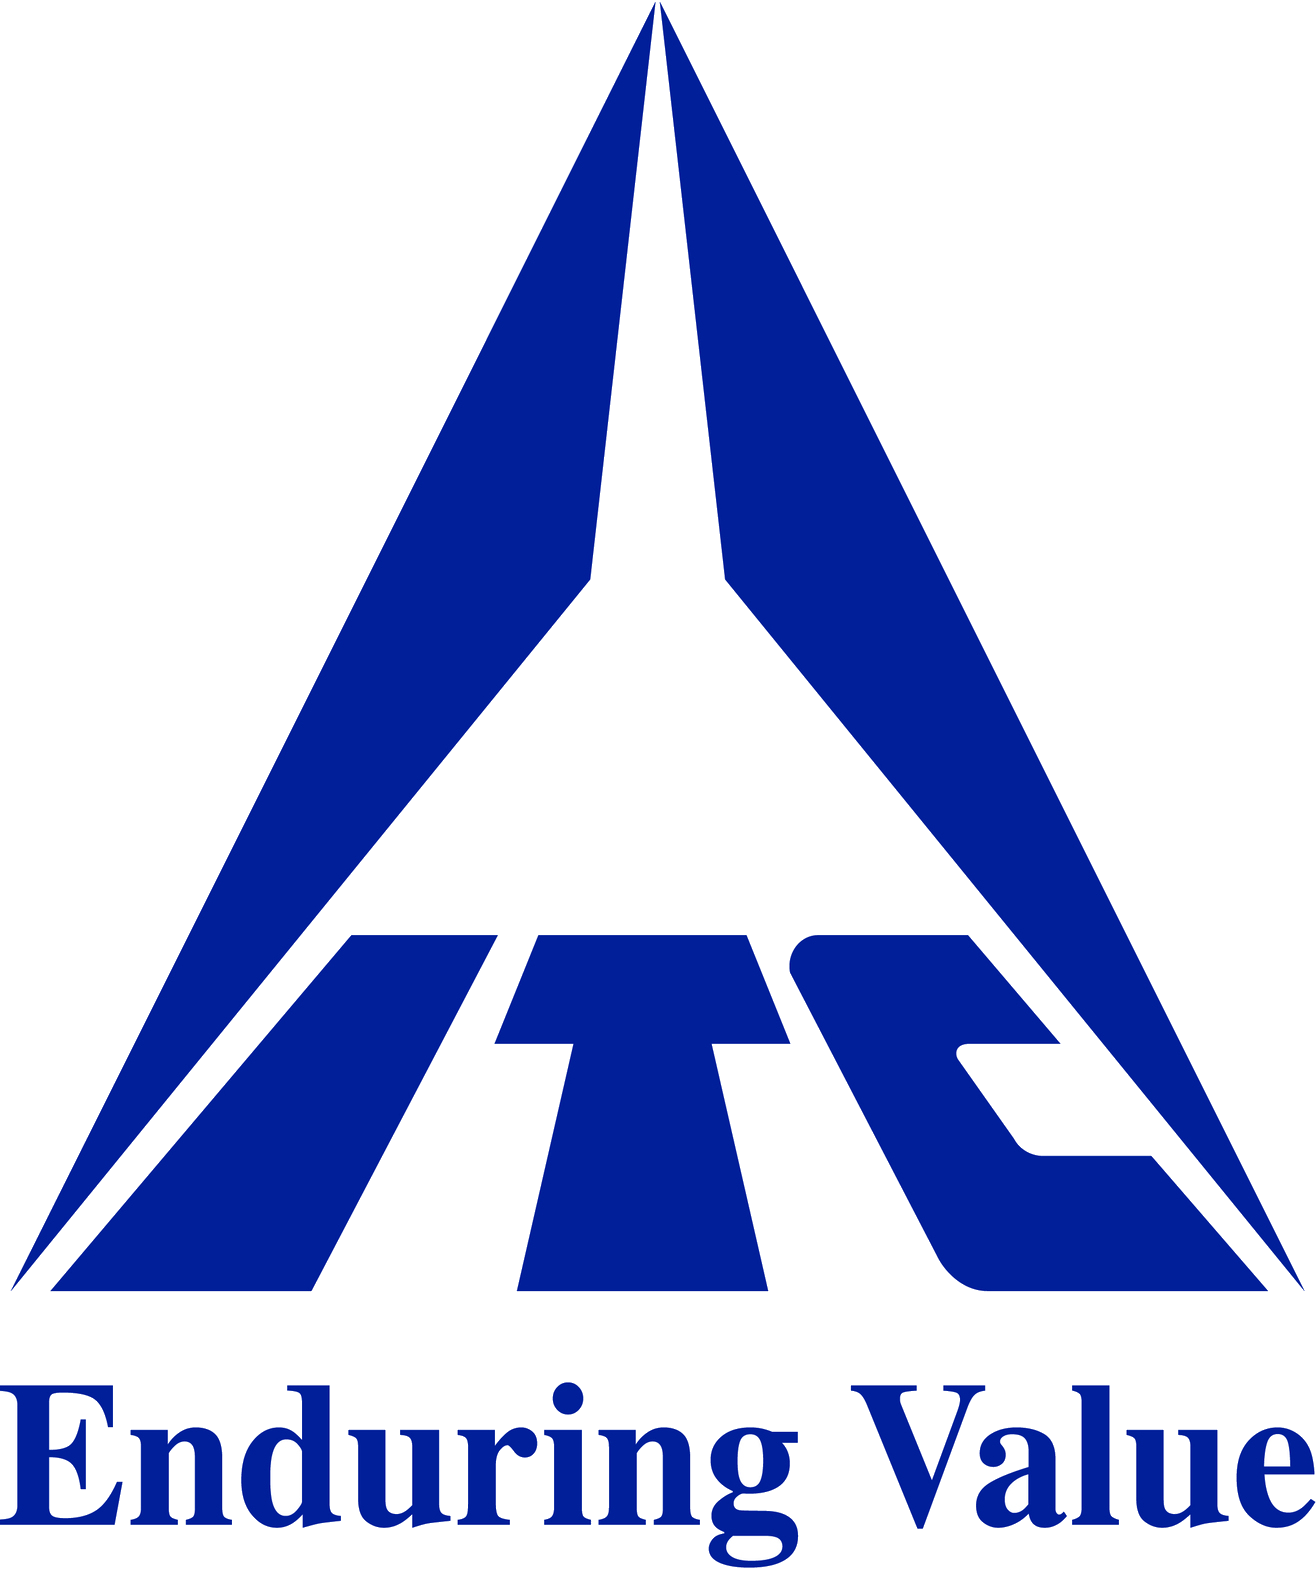 itc-logo